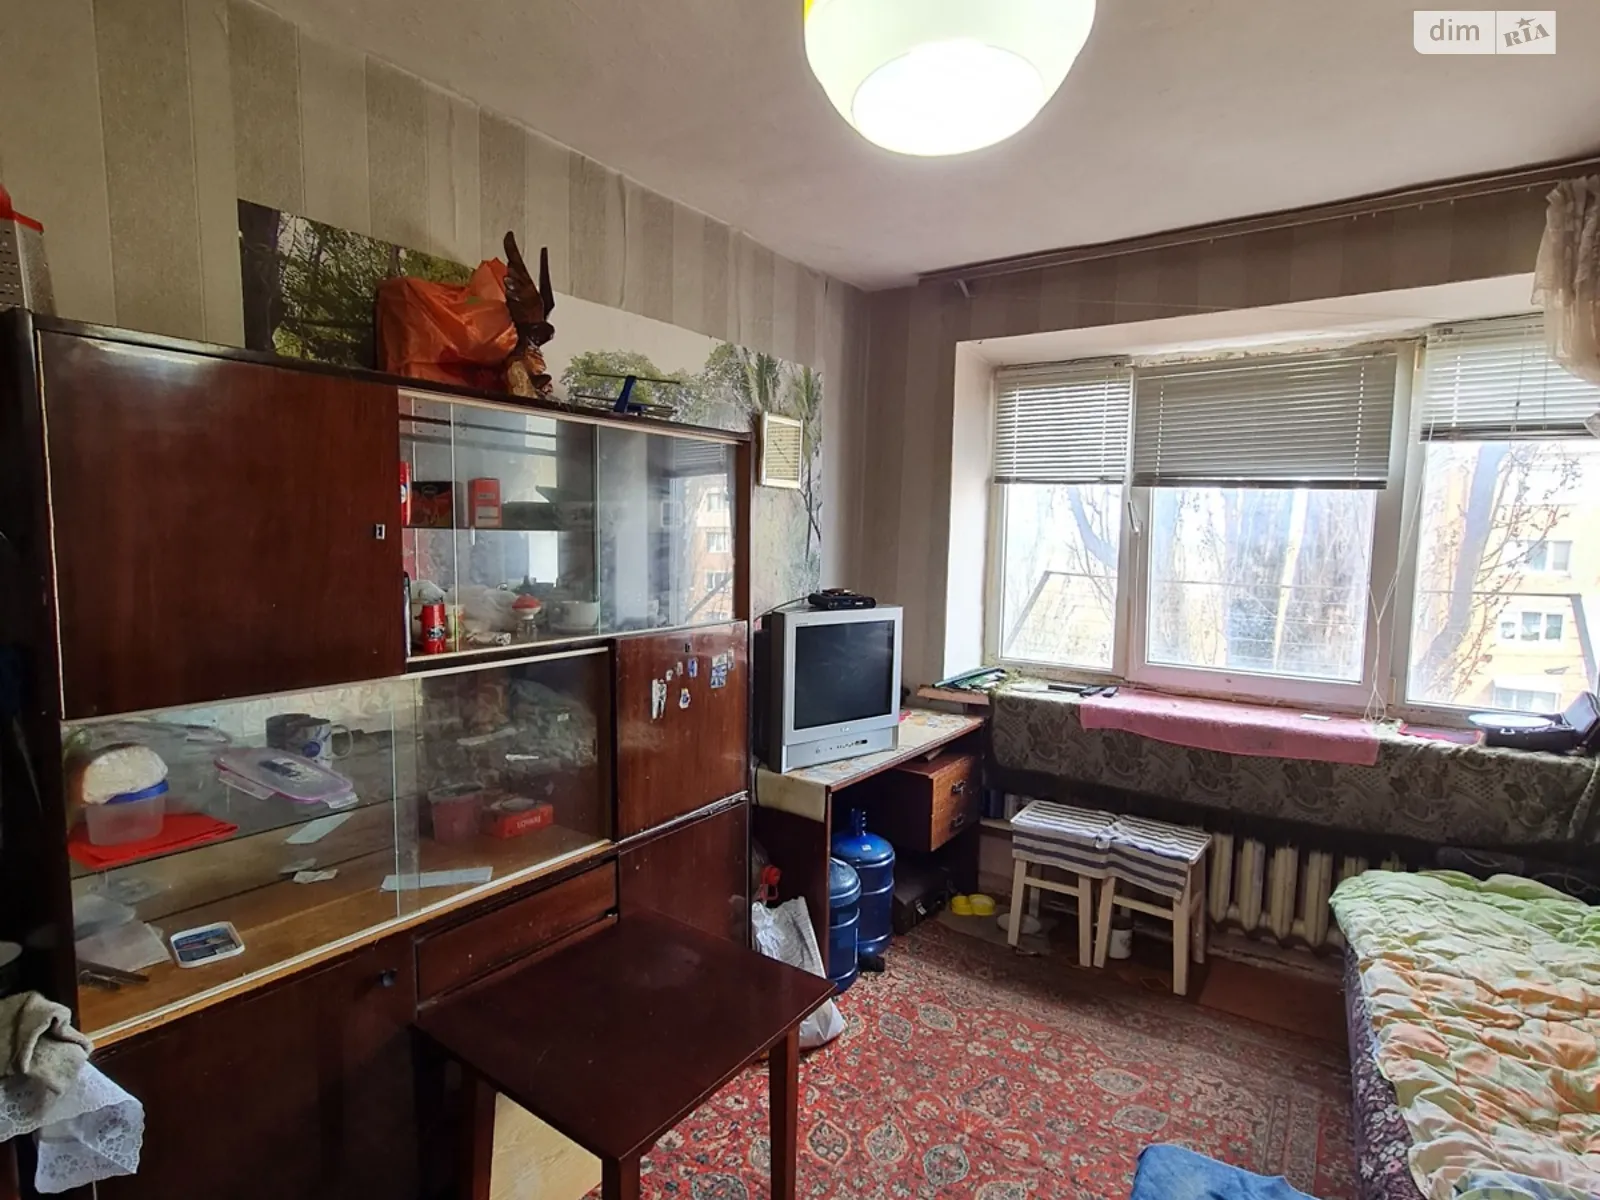 Продается комната 18.2 кв. м в Николаеве - фото 2